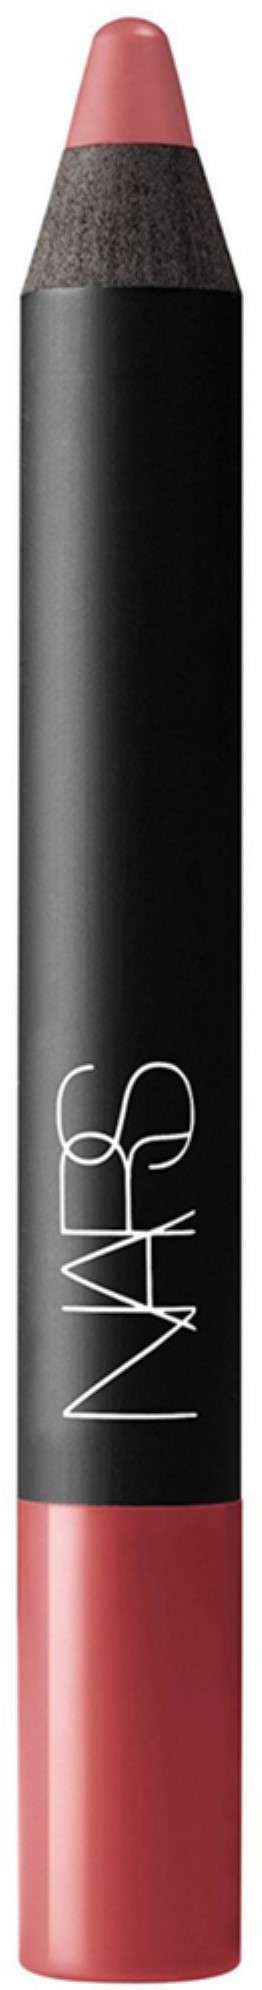 NARS Velvet Matte Lip Pencil - Dolce Vita 0.08 oz Lipstick - image 1 of 3